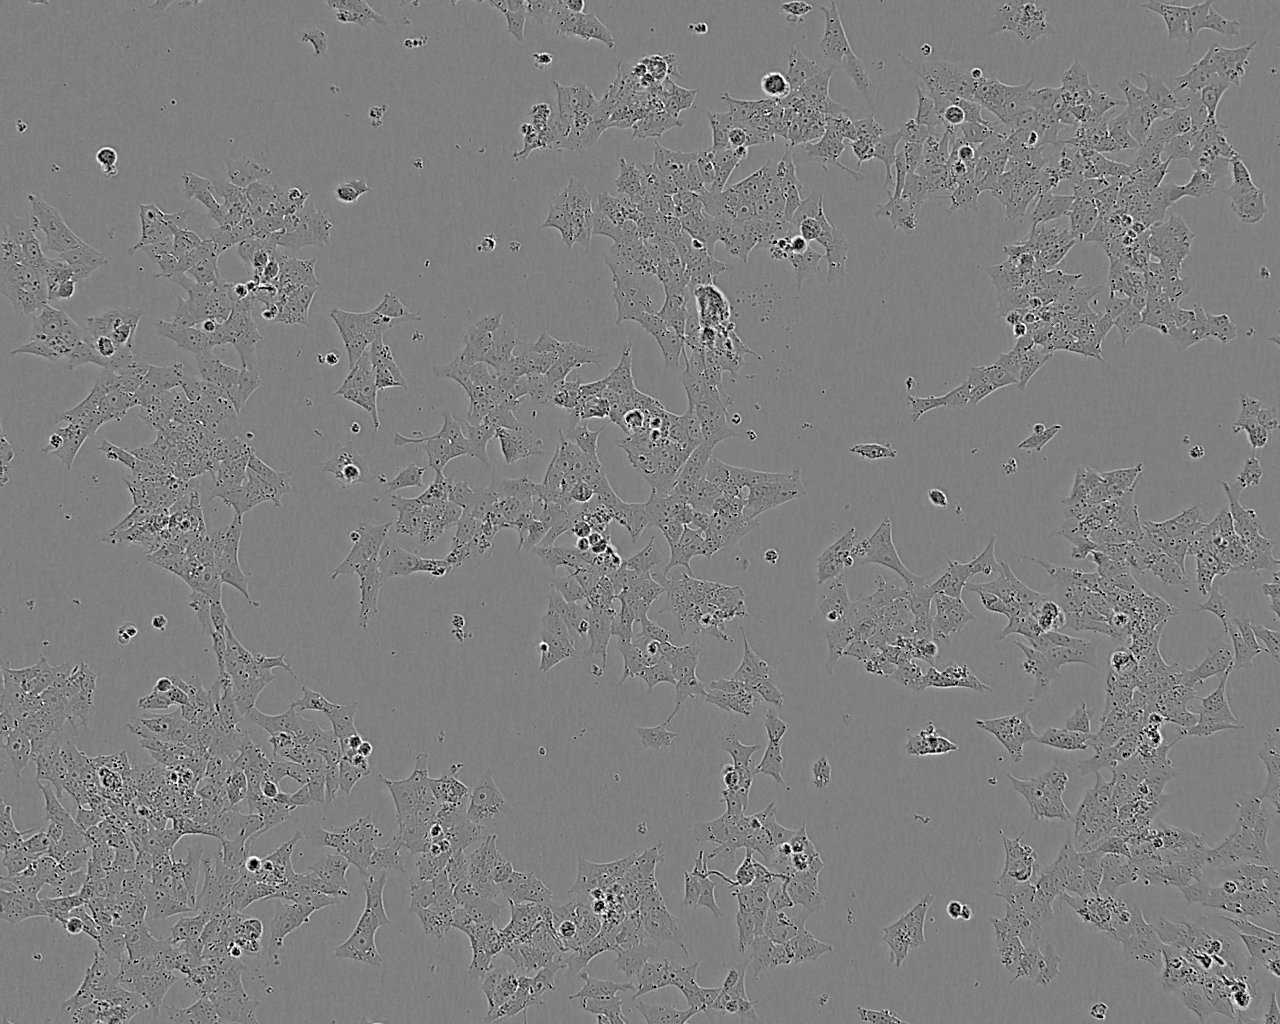 SIRC epithelioid cells兔角膜上皮细胞系